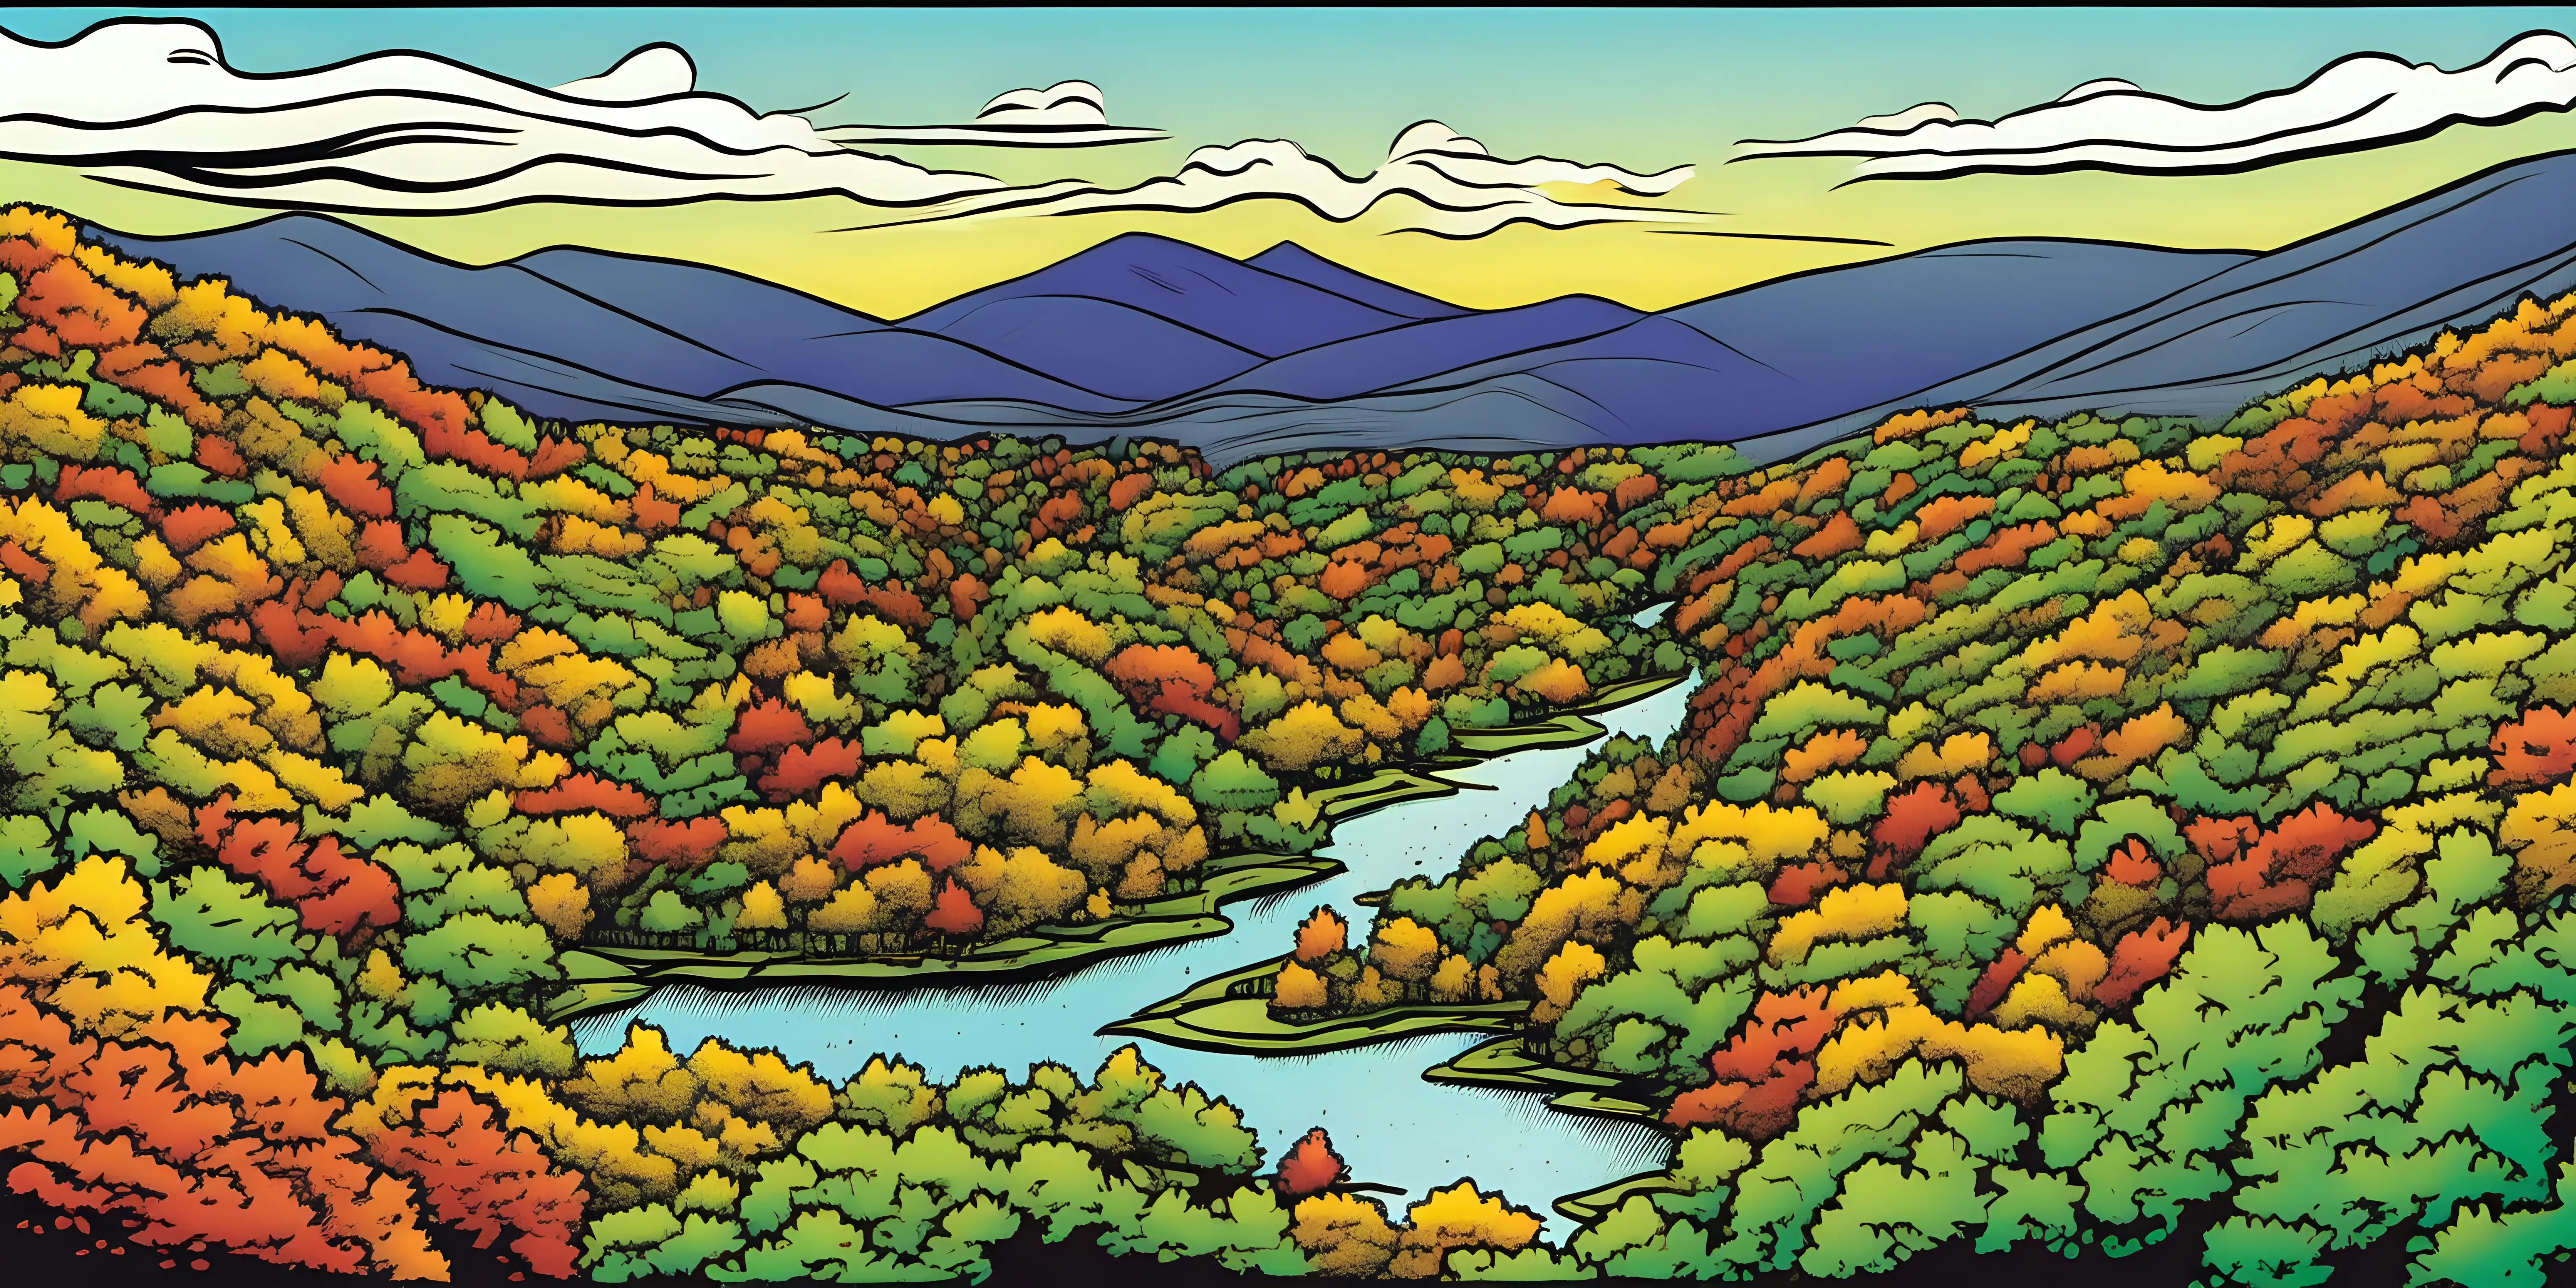 Vibrant Cartoon Illustration of the Scenic Taconic Mountain Range